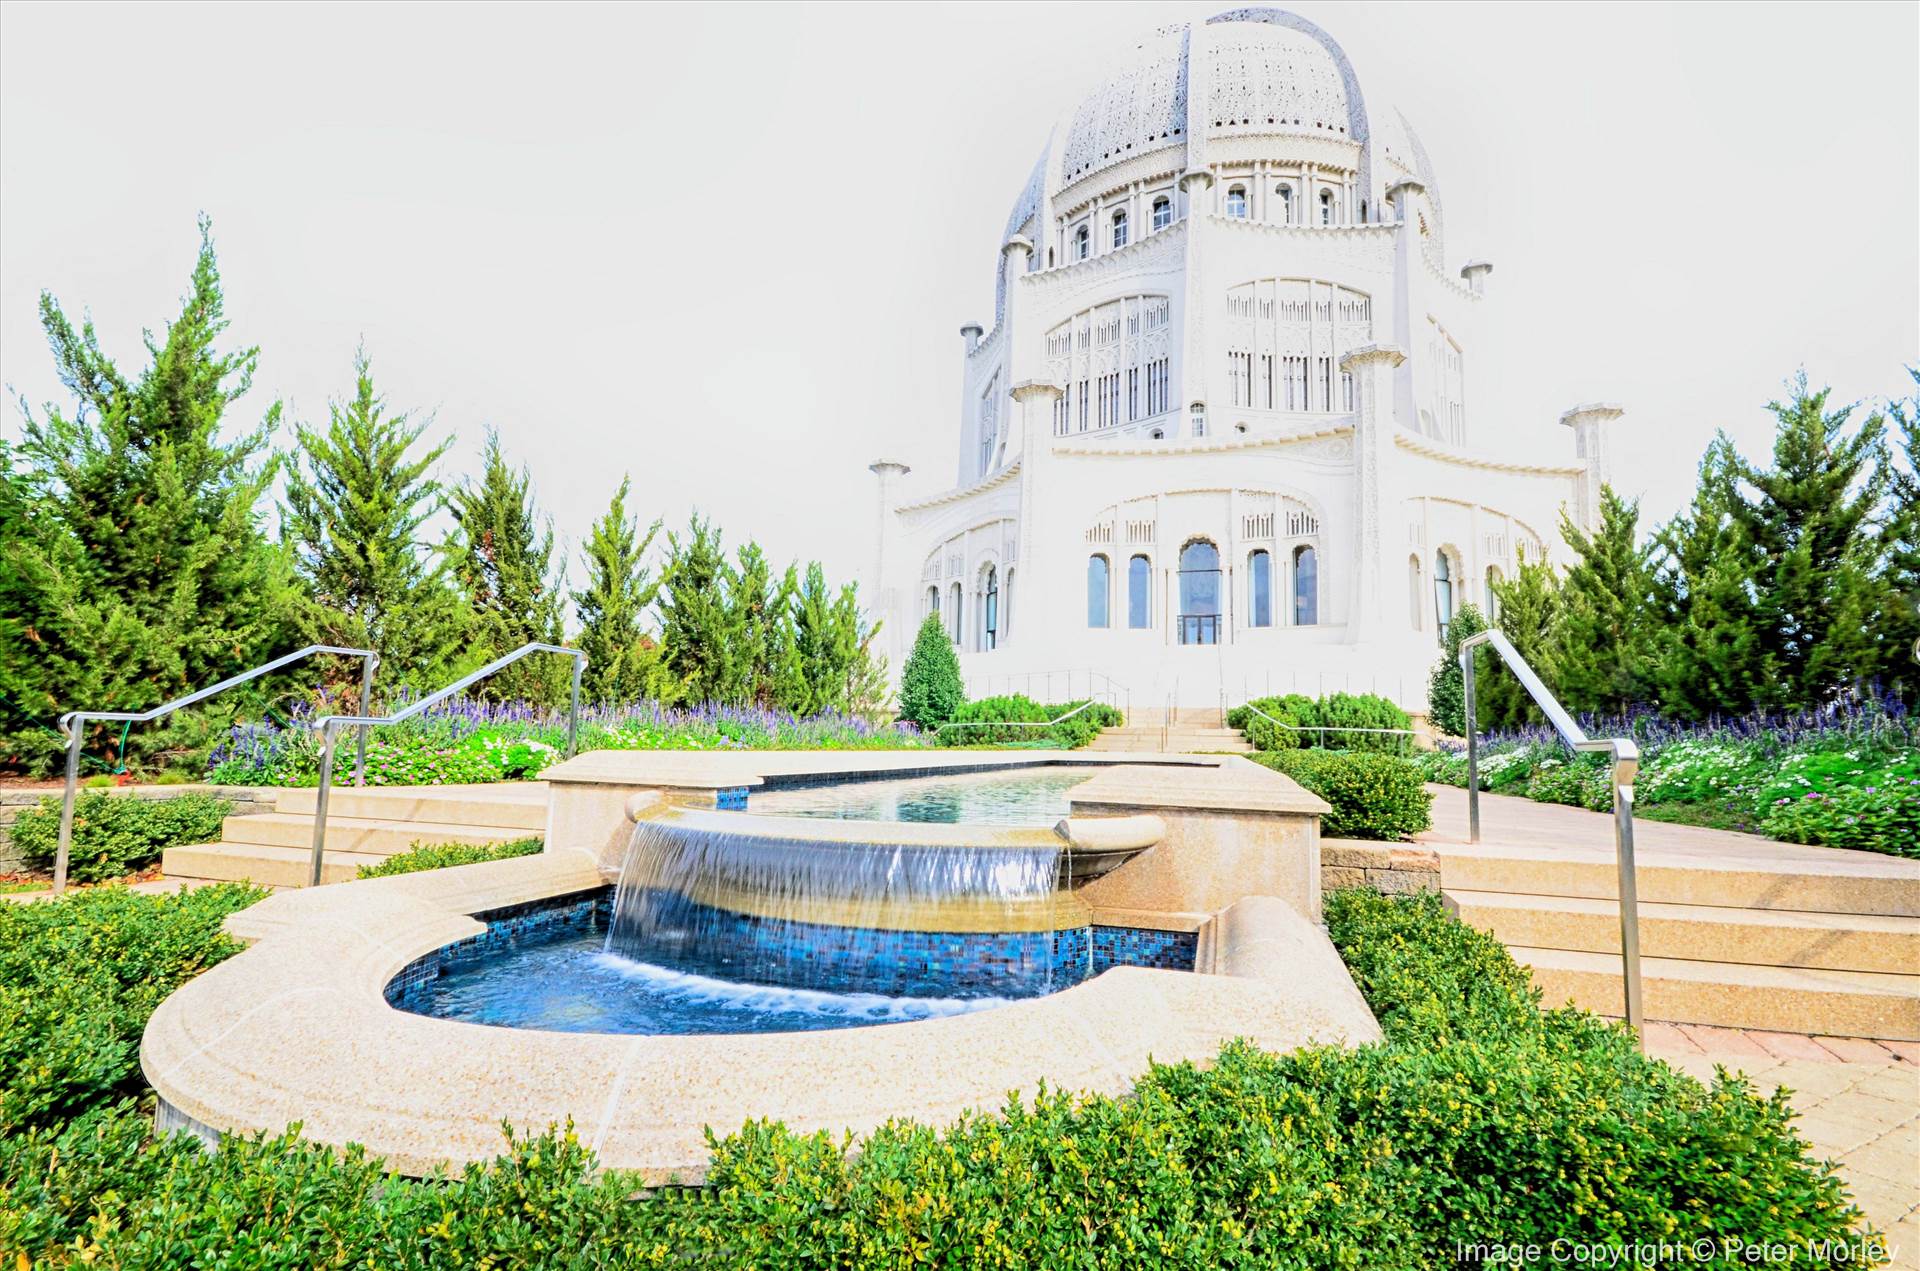 The Bahá'í House of Worship The Bahá'í House of Worship (or Bahá'í Temple) in Wilmette, Illinois, is the oldest surviving Bahá'í House of Worship in the world, and the only one in the USA by WPC-38